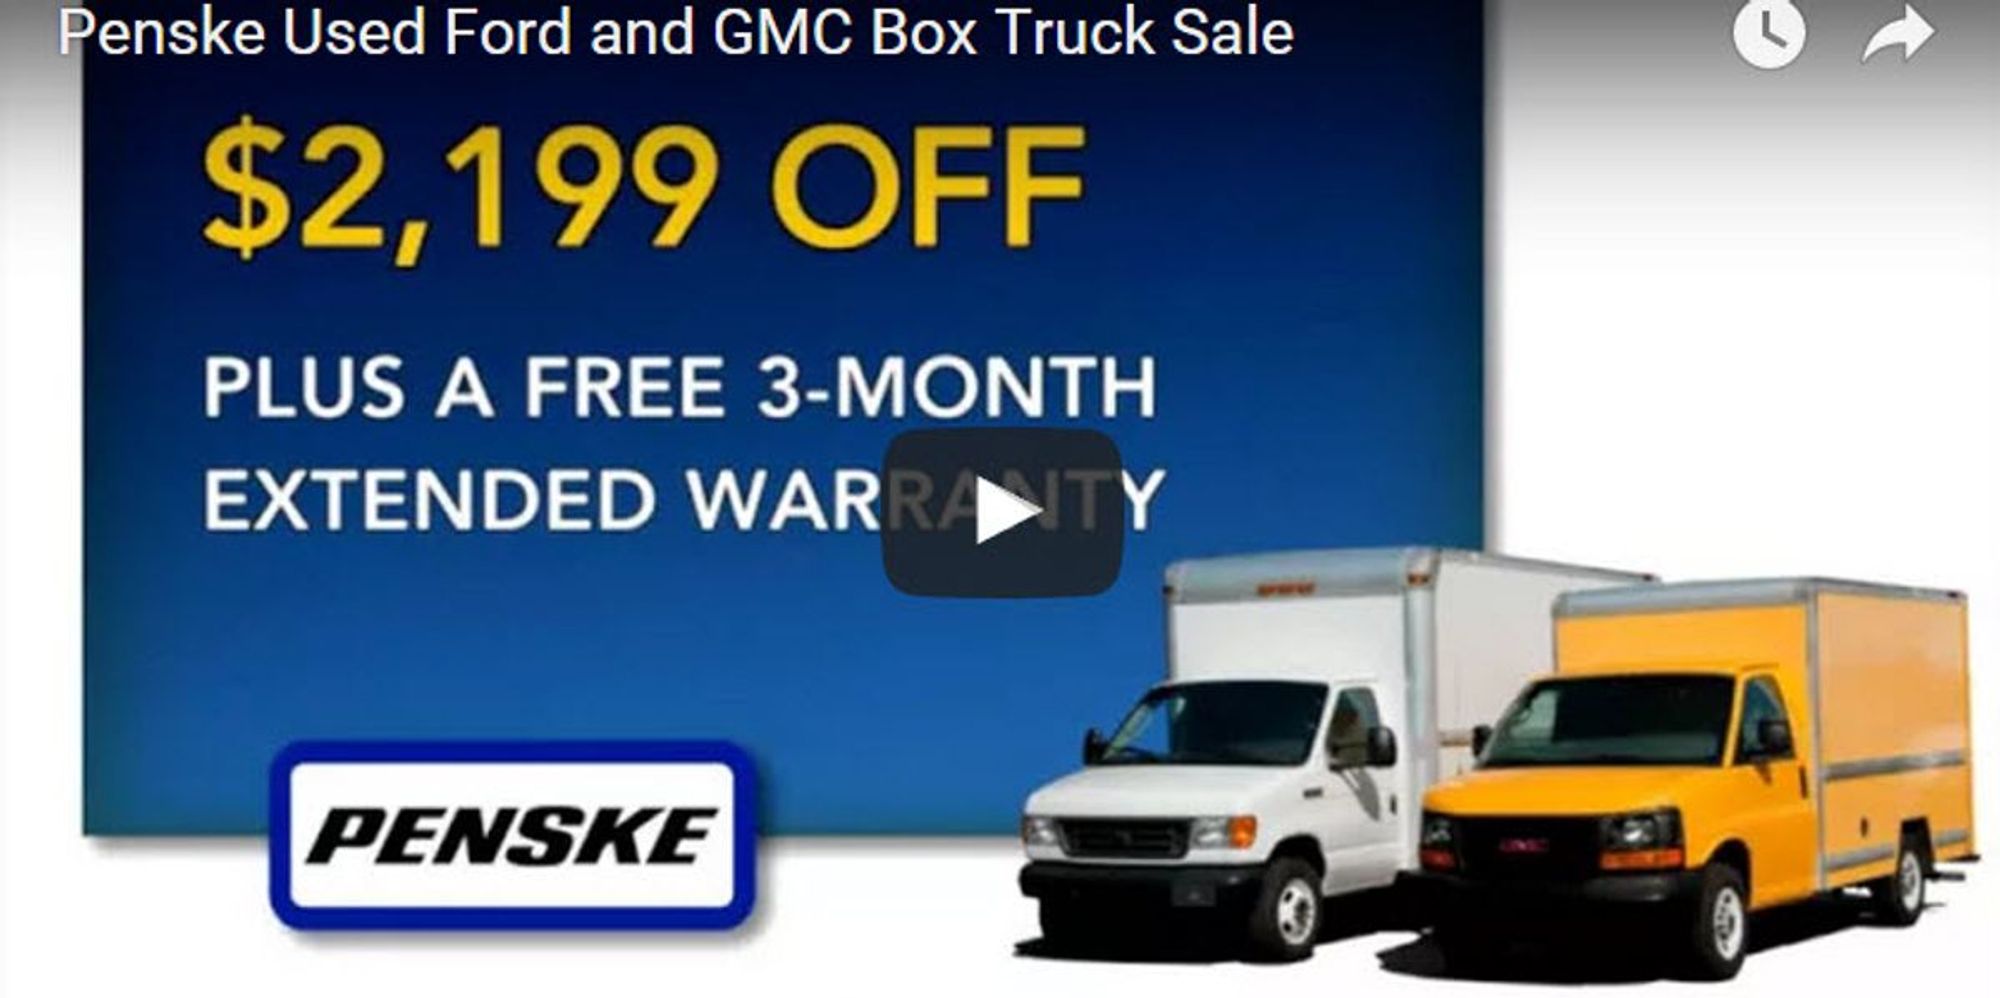 Penske Used Ford and GMC Box Truck Sale Penske